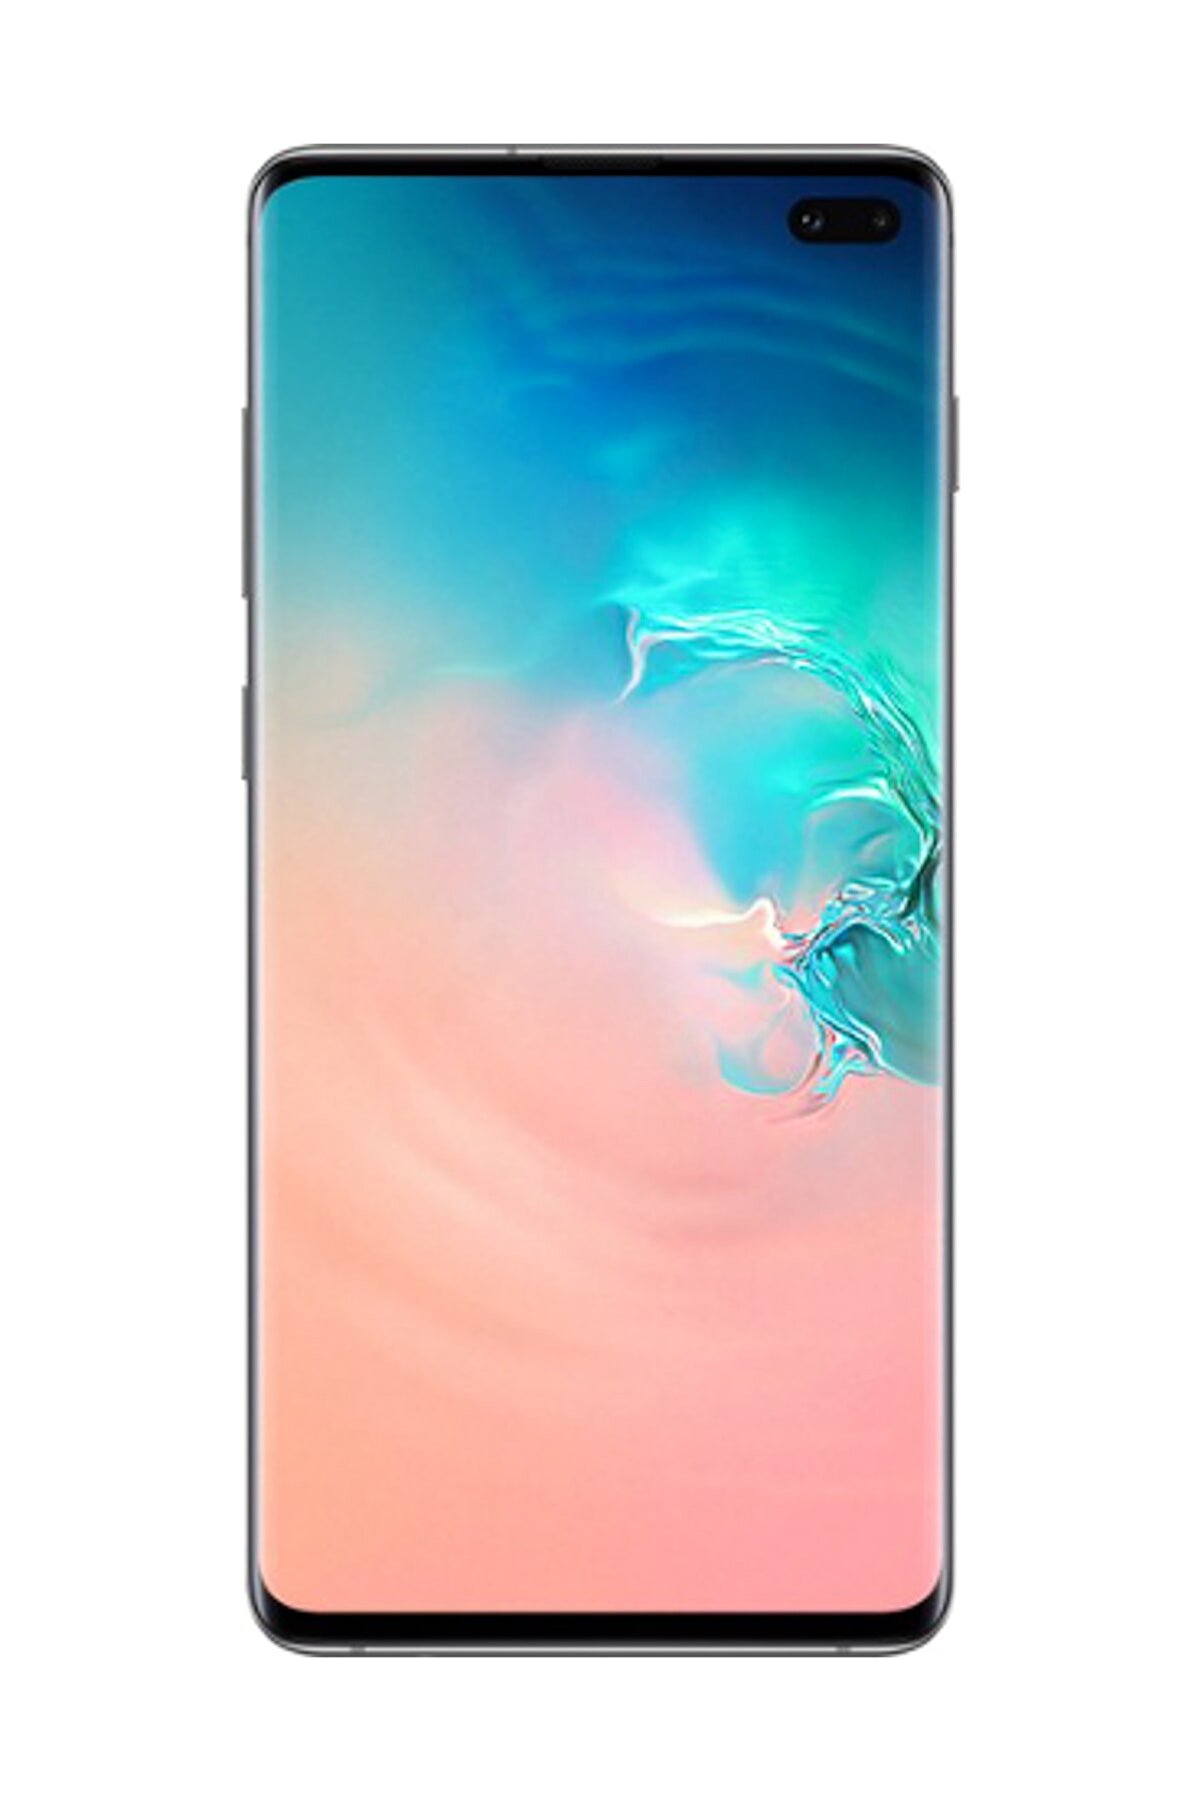 Samsung Galaxy S10 Plus 128 GB Beyaz Cep Telefonu (Samsung Türkiye Garantili) SM-G975FZWATURBEYAZ